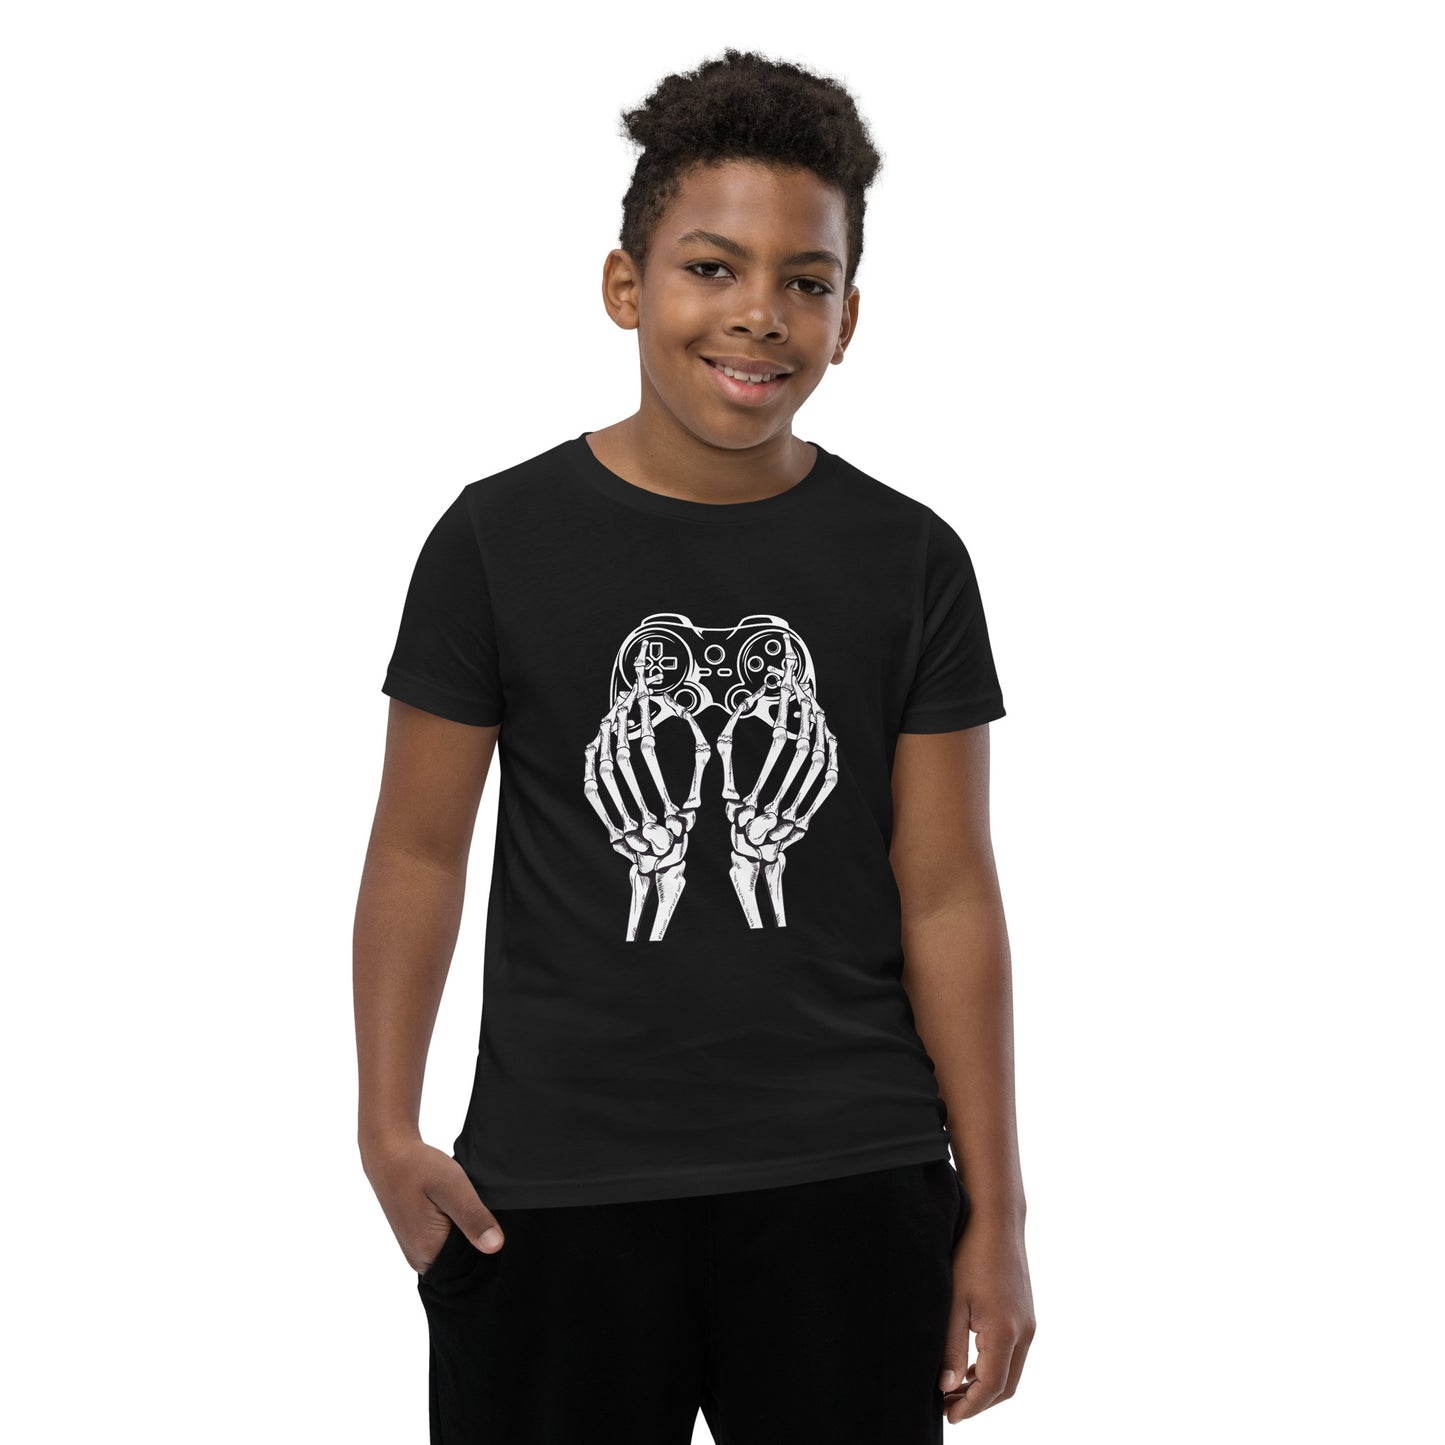 Skeleton Gamer Youth Halloween T-shirt